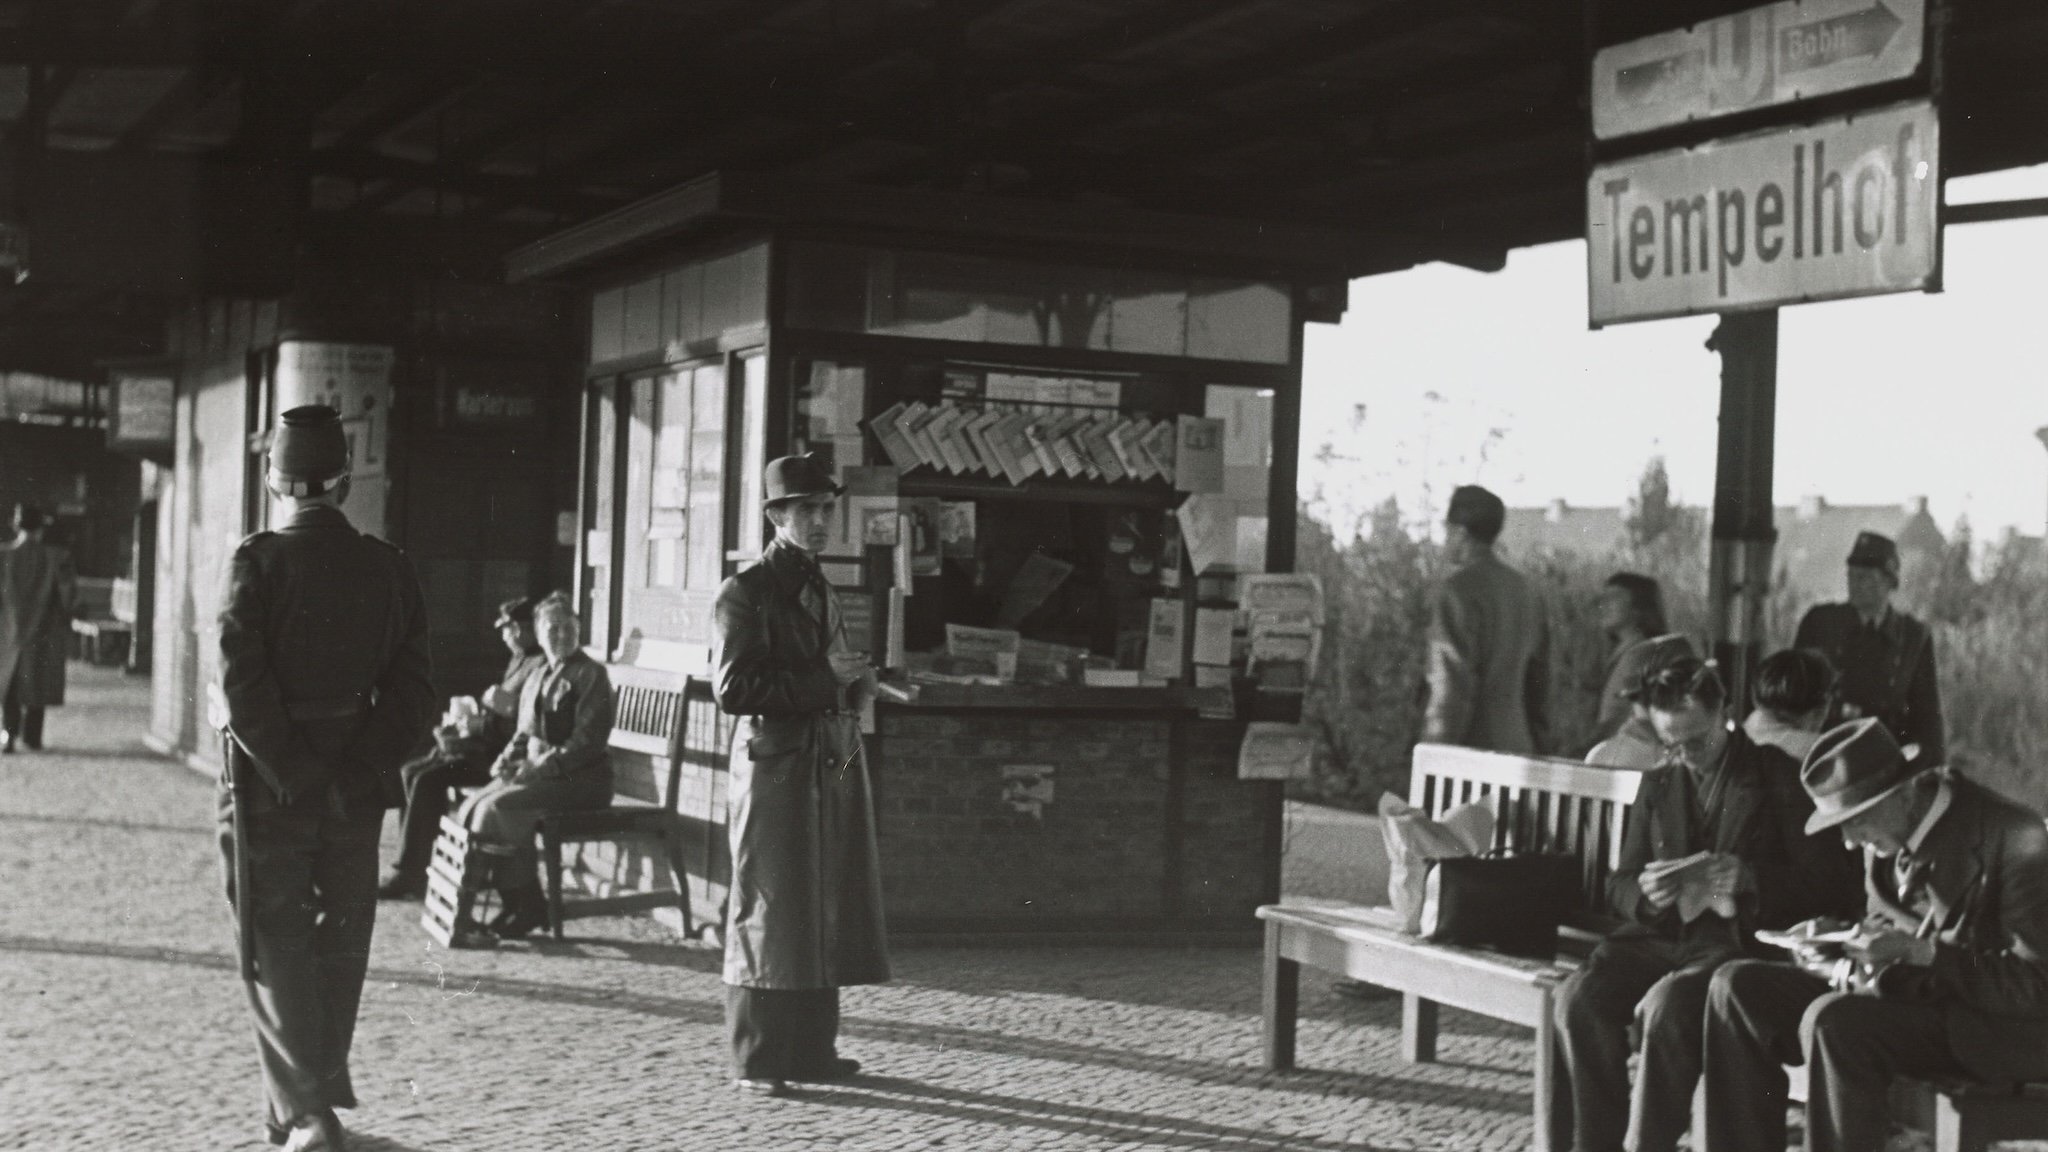 Der S-Bahnhof Tempelhof um ca. 1949